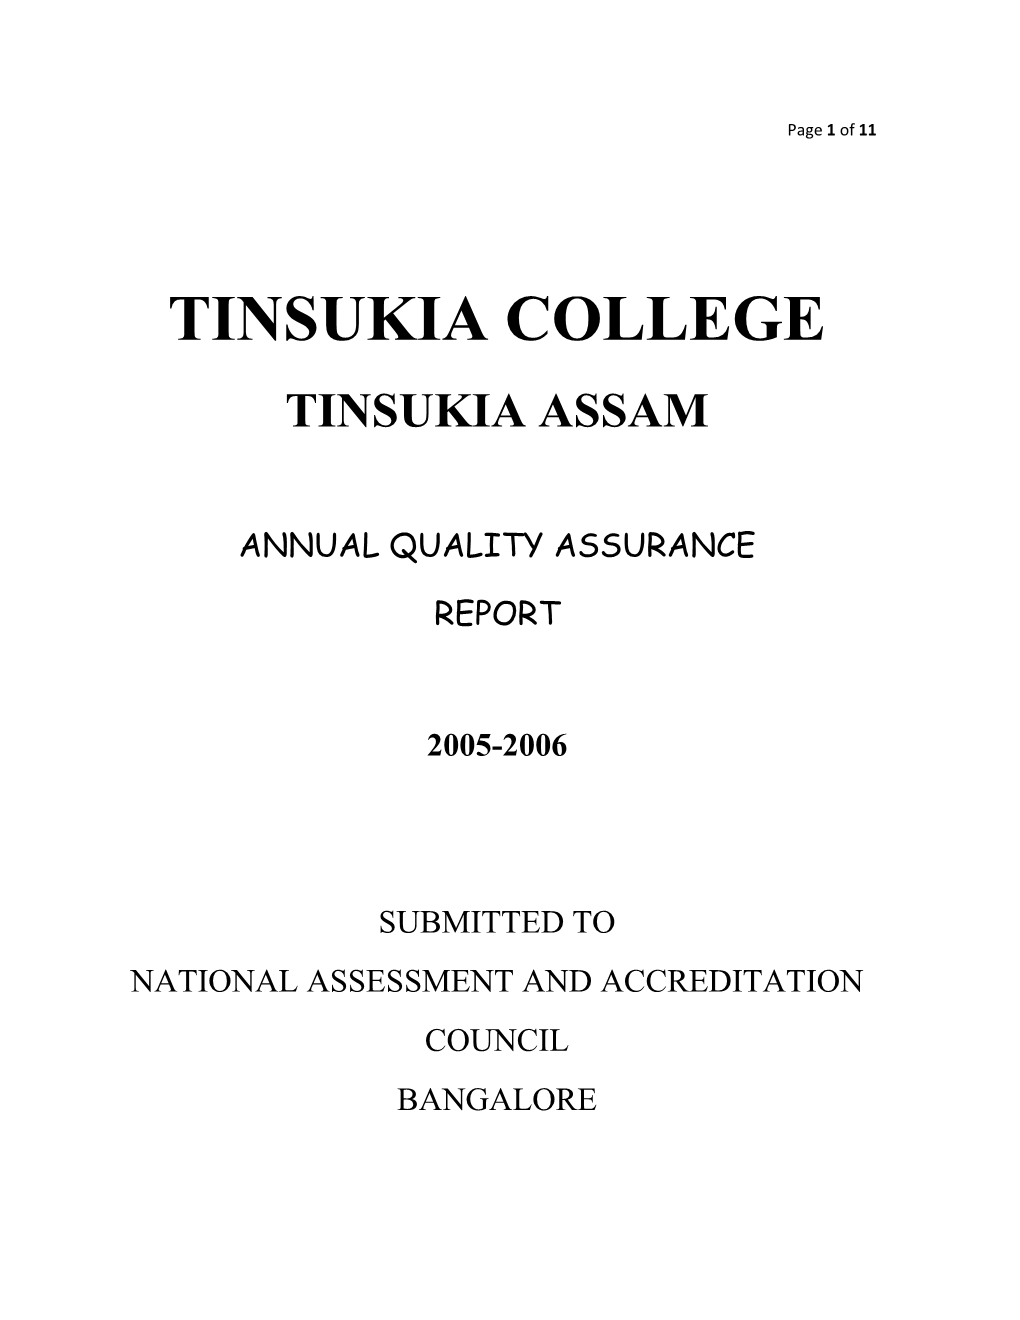 Tinsukia College Tinsukia Assam